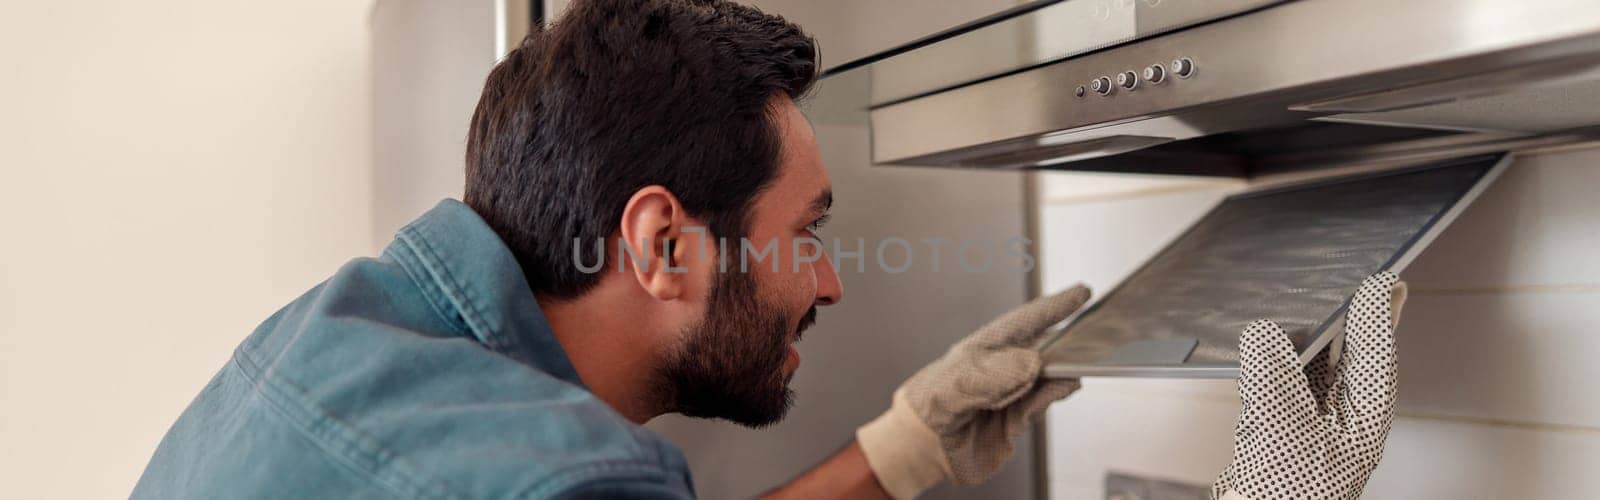 Handyman in uniform repairing kitchen extractor, replacing filter in cooker hood.Maintenance concept by Yaroslav_astakhov